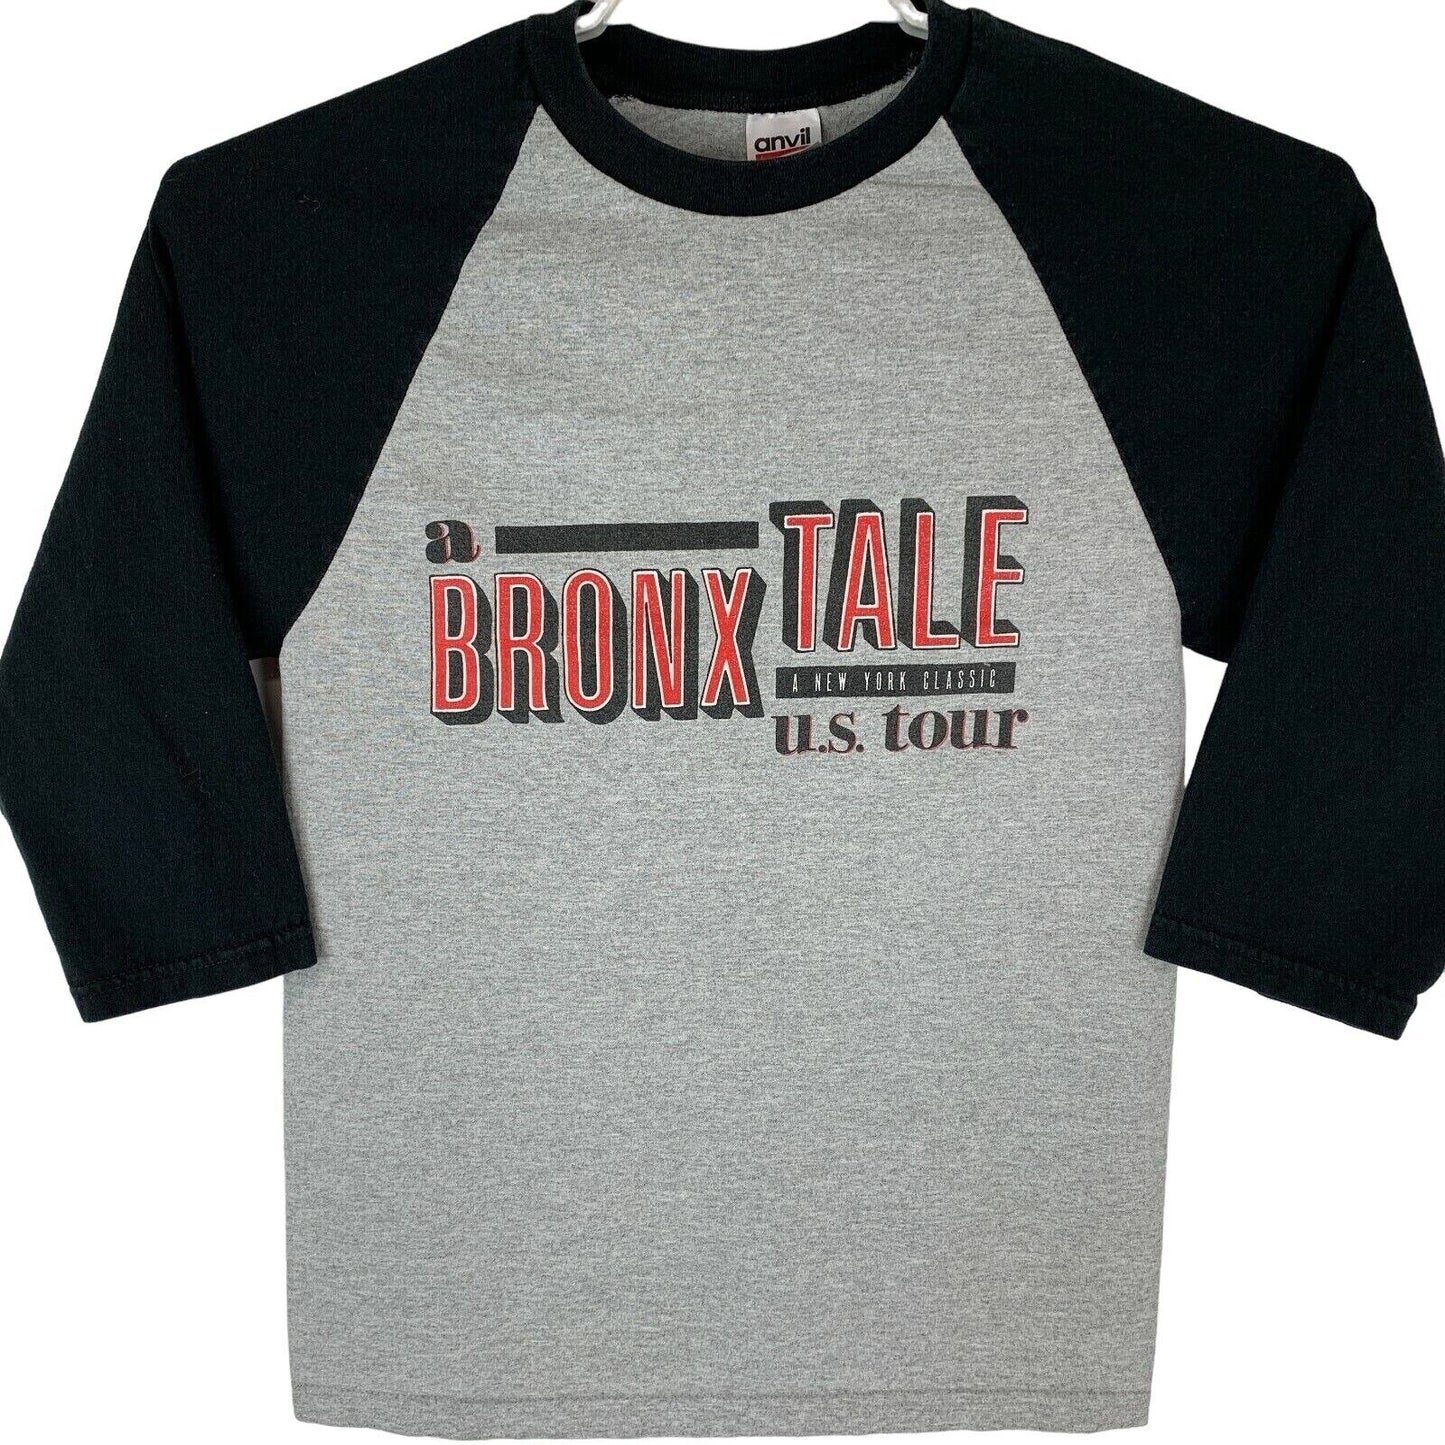 A Bronx Tale Tour Raglan T Shirt Musical New York Gray Black Graphic Tee Small